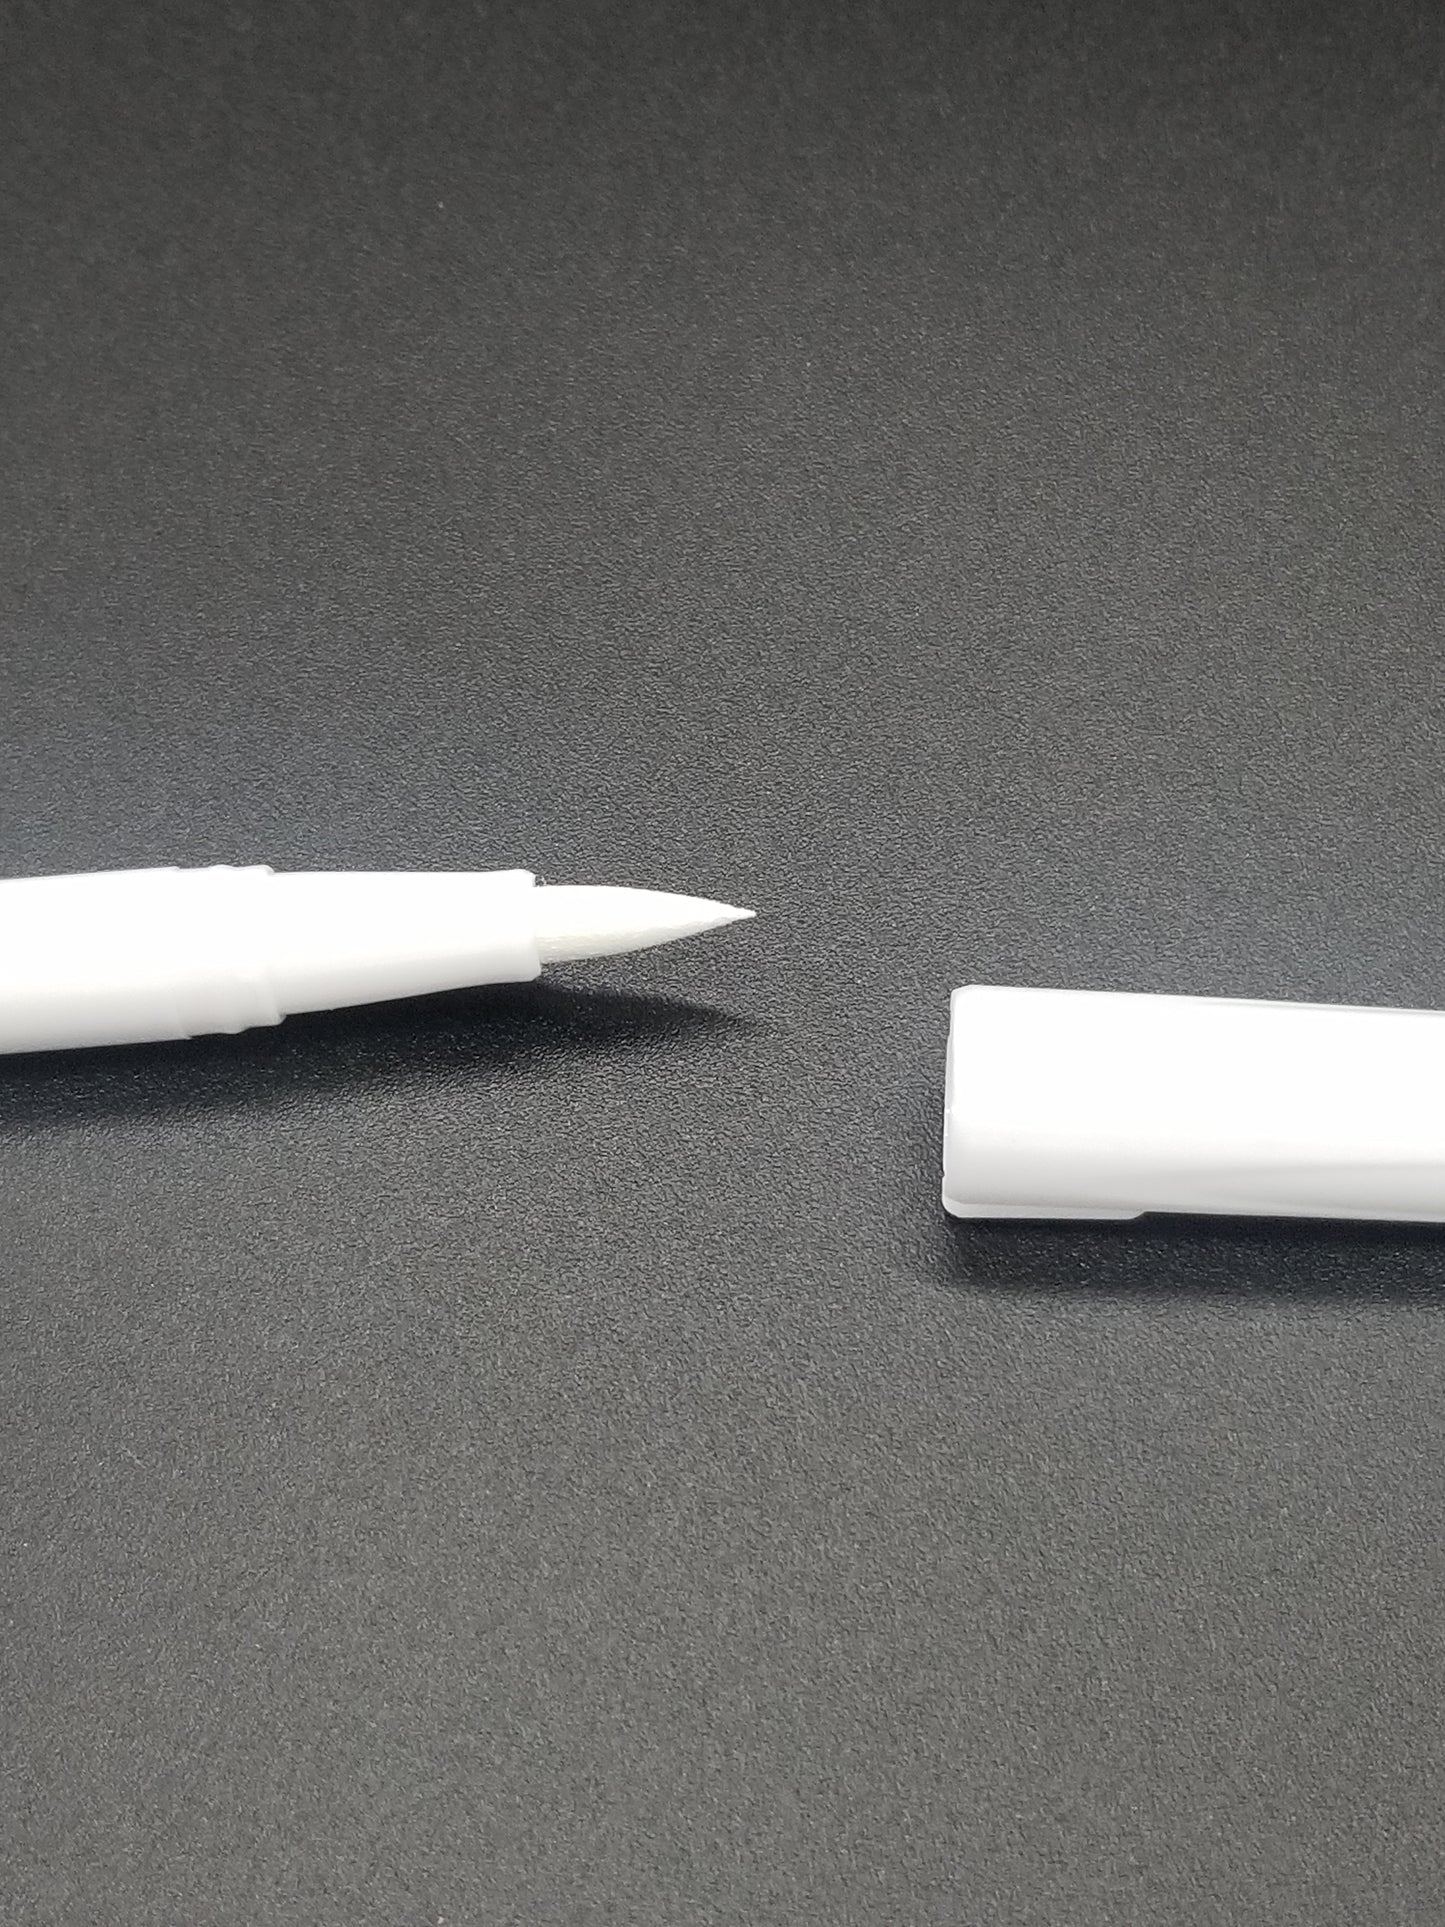 White Edible Pen | Edible Marker